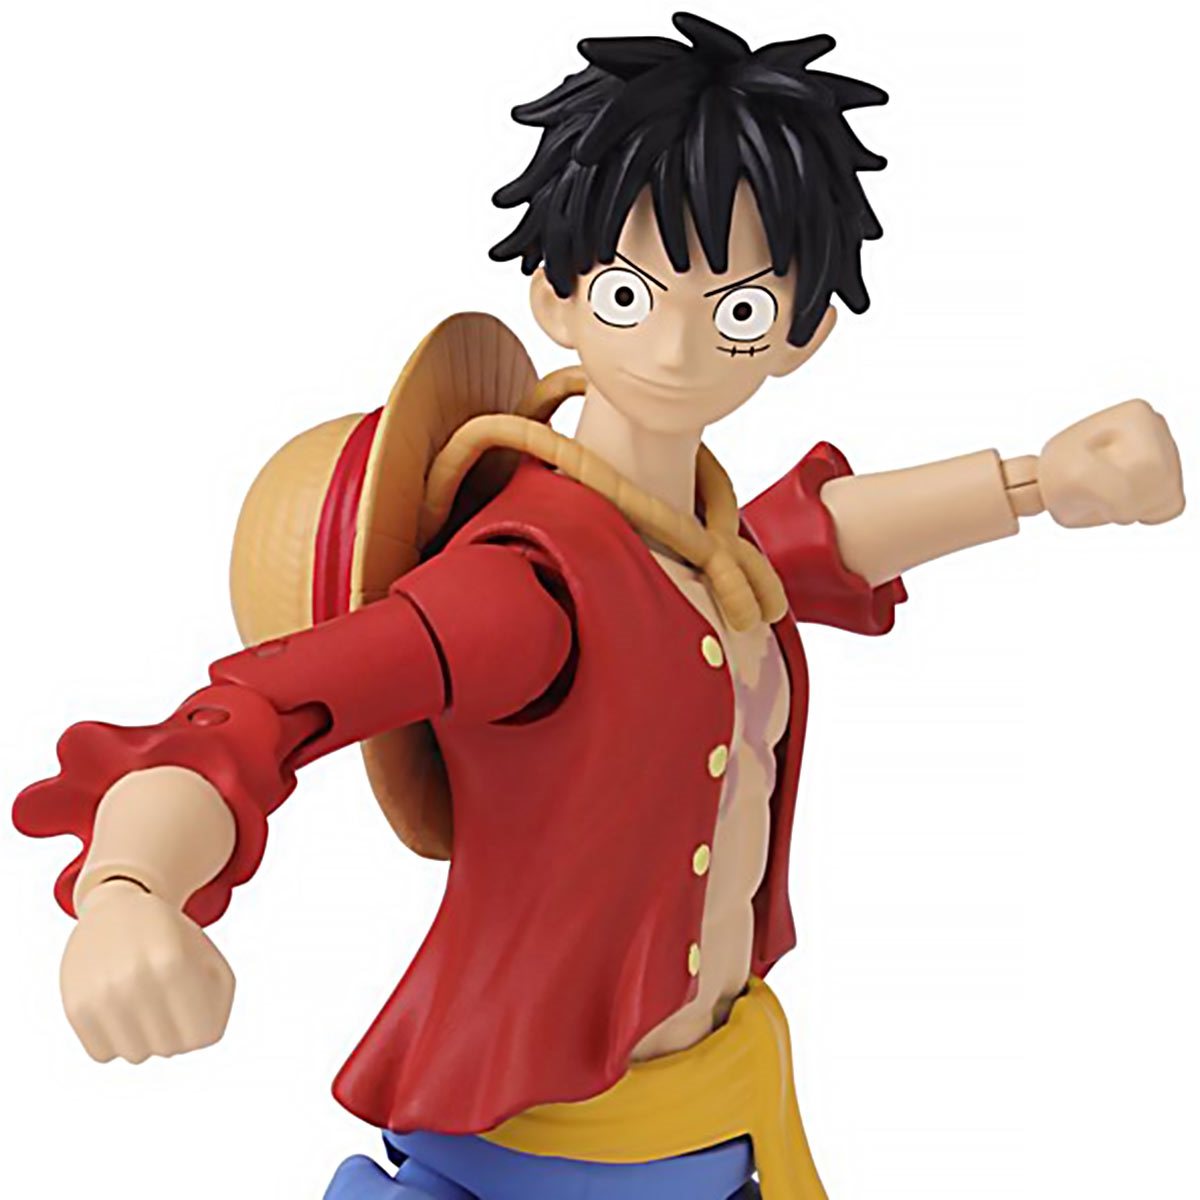 Bandai Anime Heroes Shanks Action Figure Merchandise - Zavvi UK